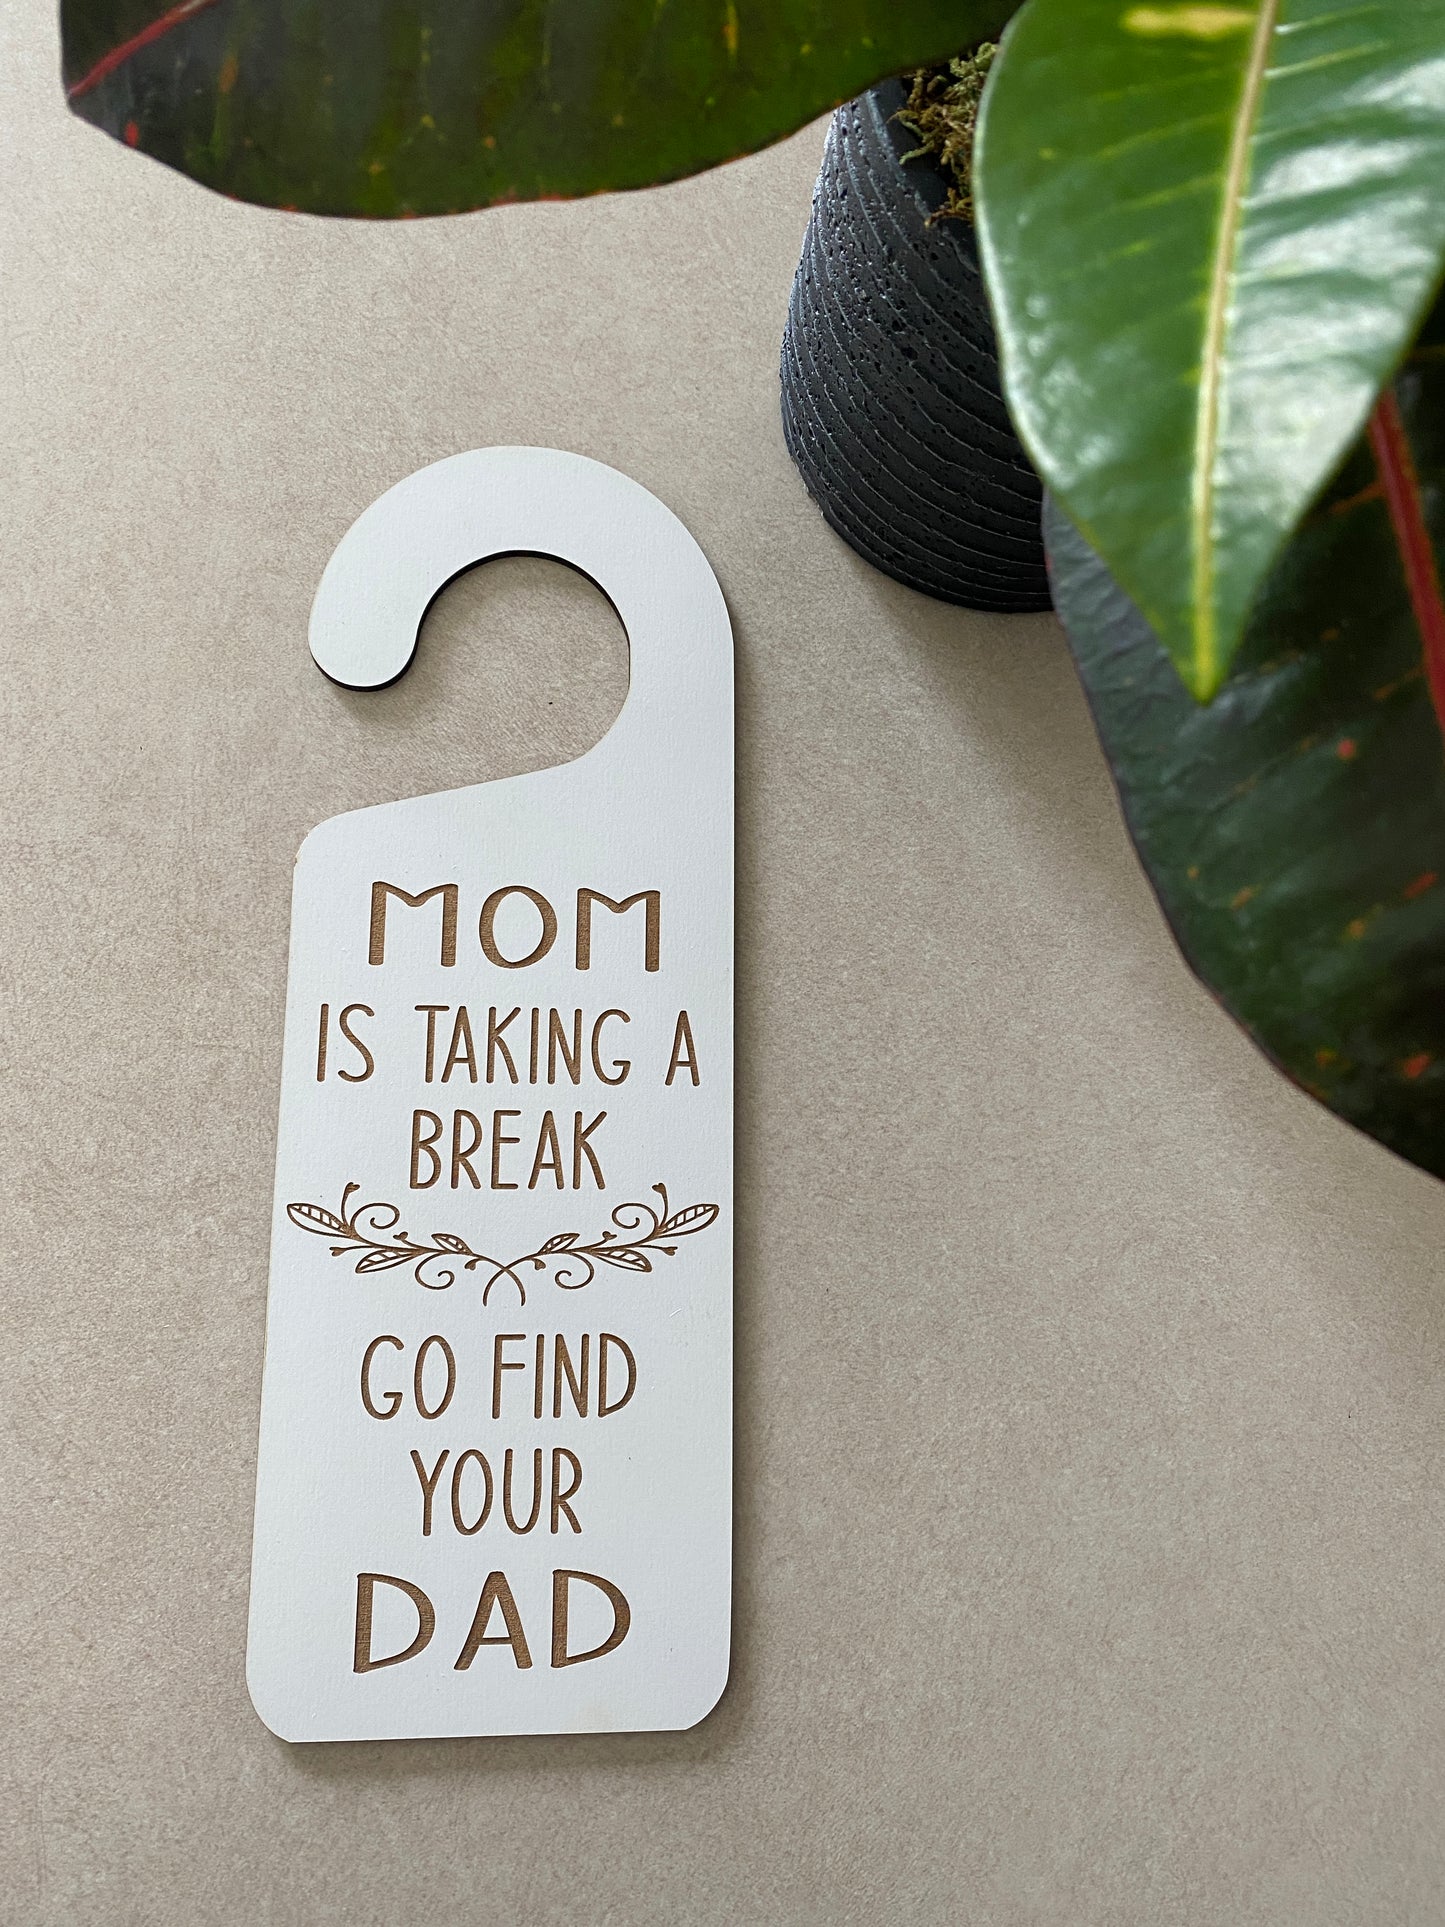 Mom Is Taking A Break, Go Find Your Dad doorknob sign